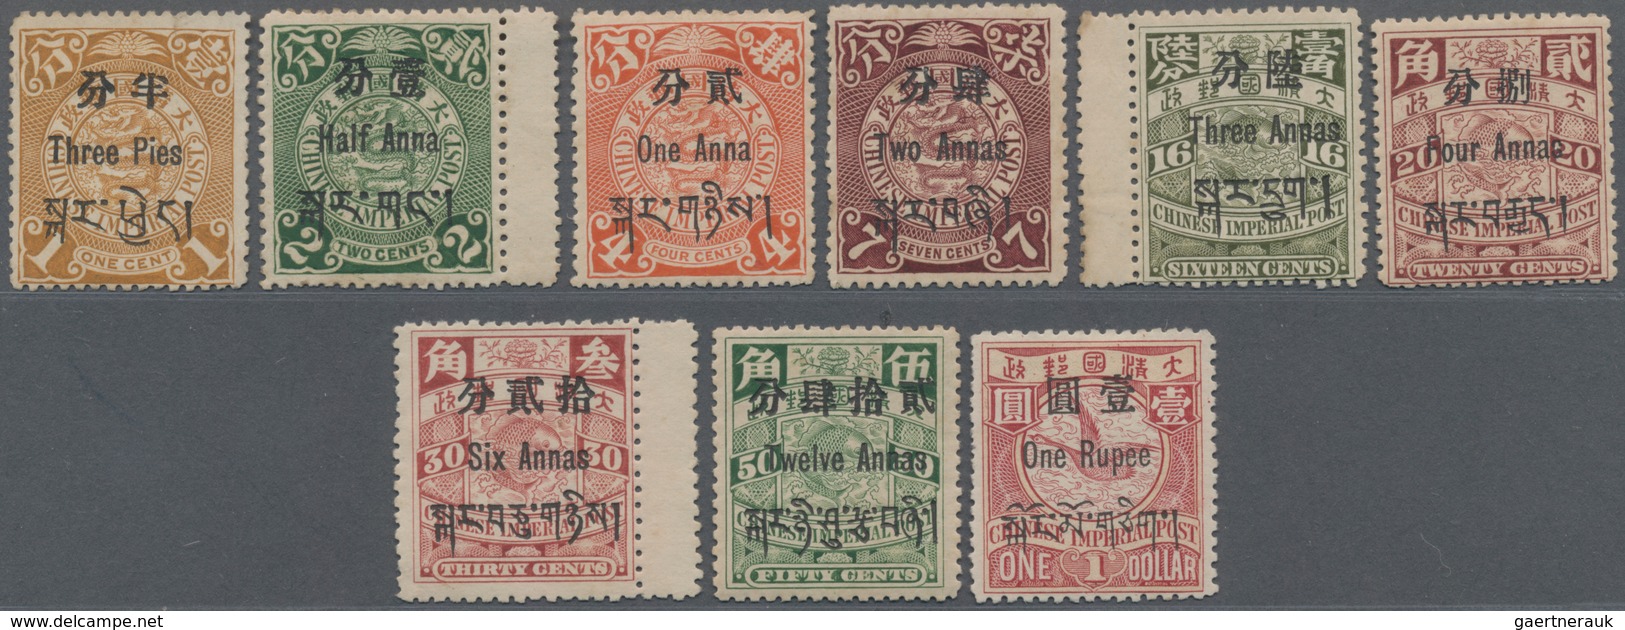 China - Provinzausgaben - Chinesische Post In Tibet (1911): 1911, Surcharges On 1 C., 3 C., 16 C., 3 - Xinjiang 1915-49